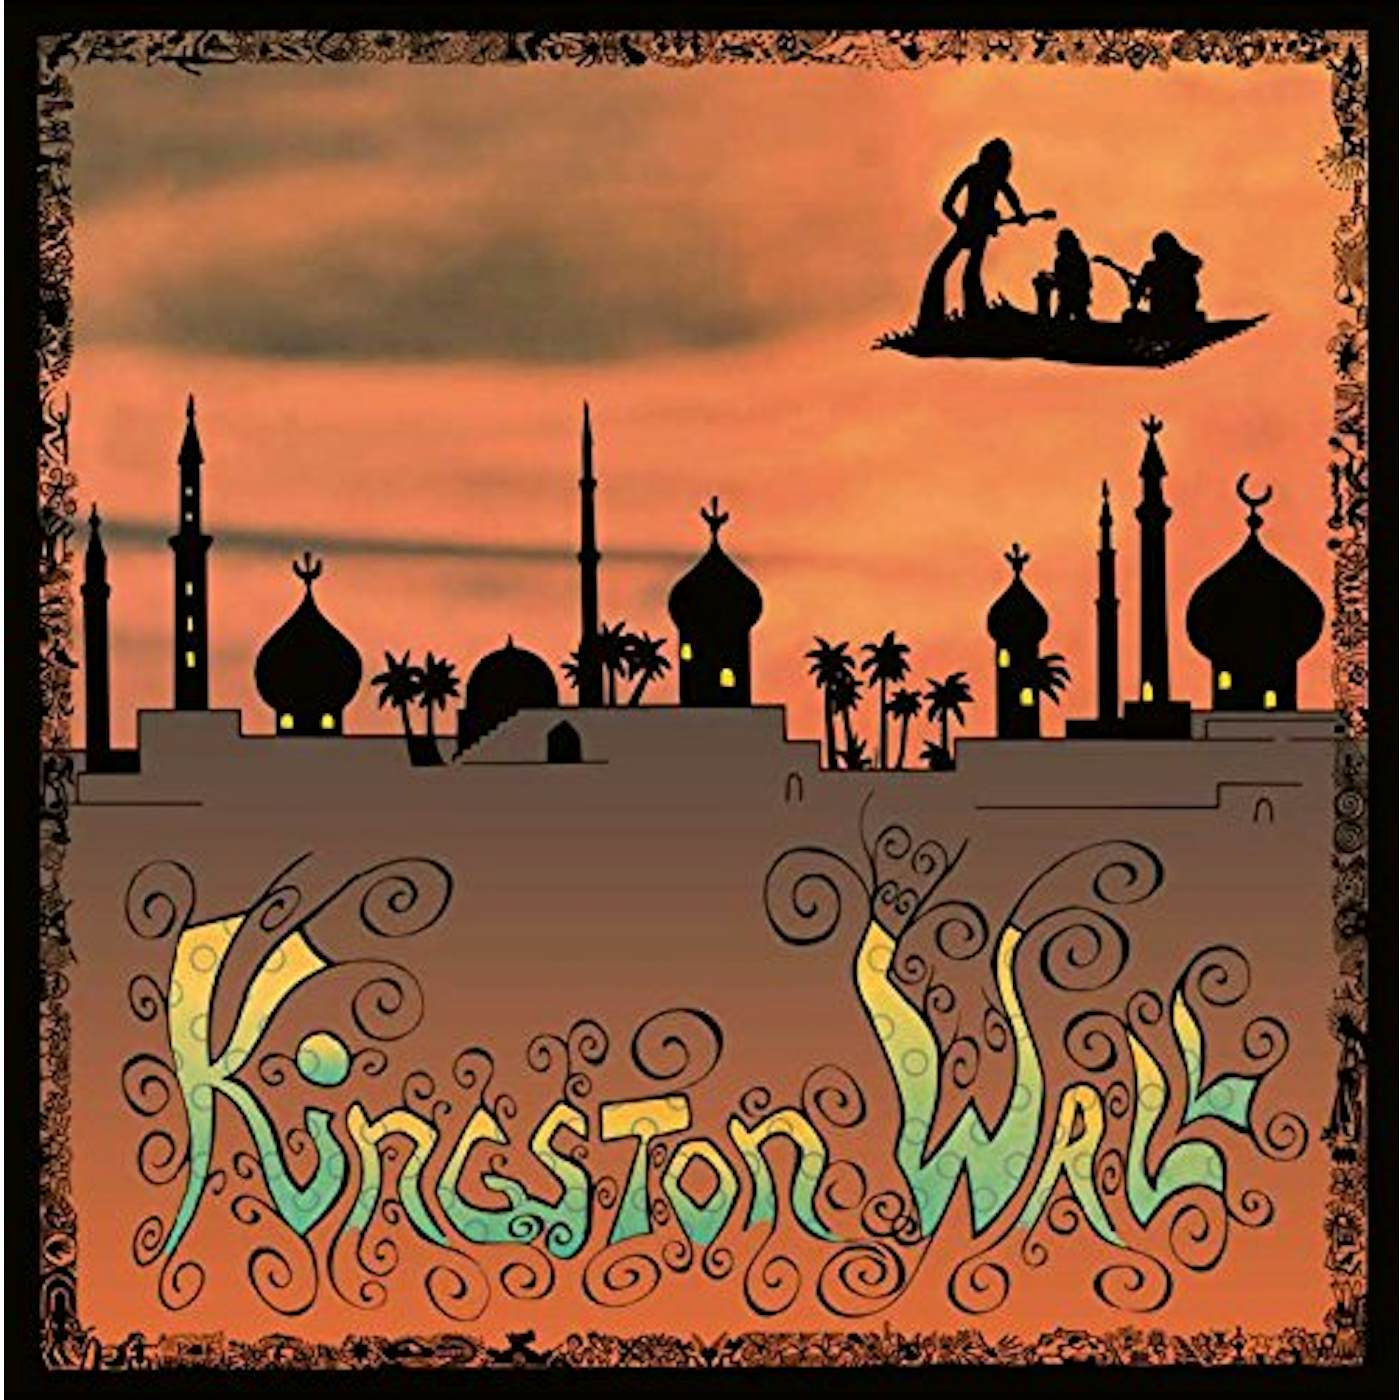 Kingston Wall III PART 1 Vinyl Record - UK Release